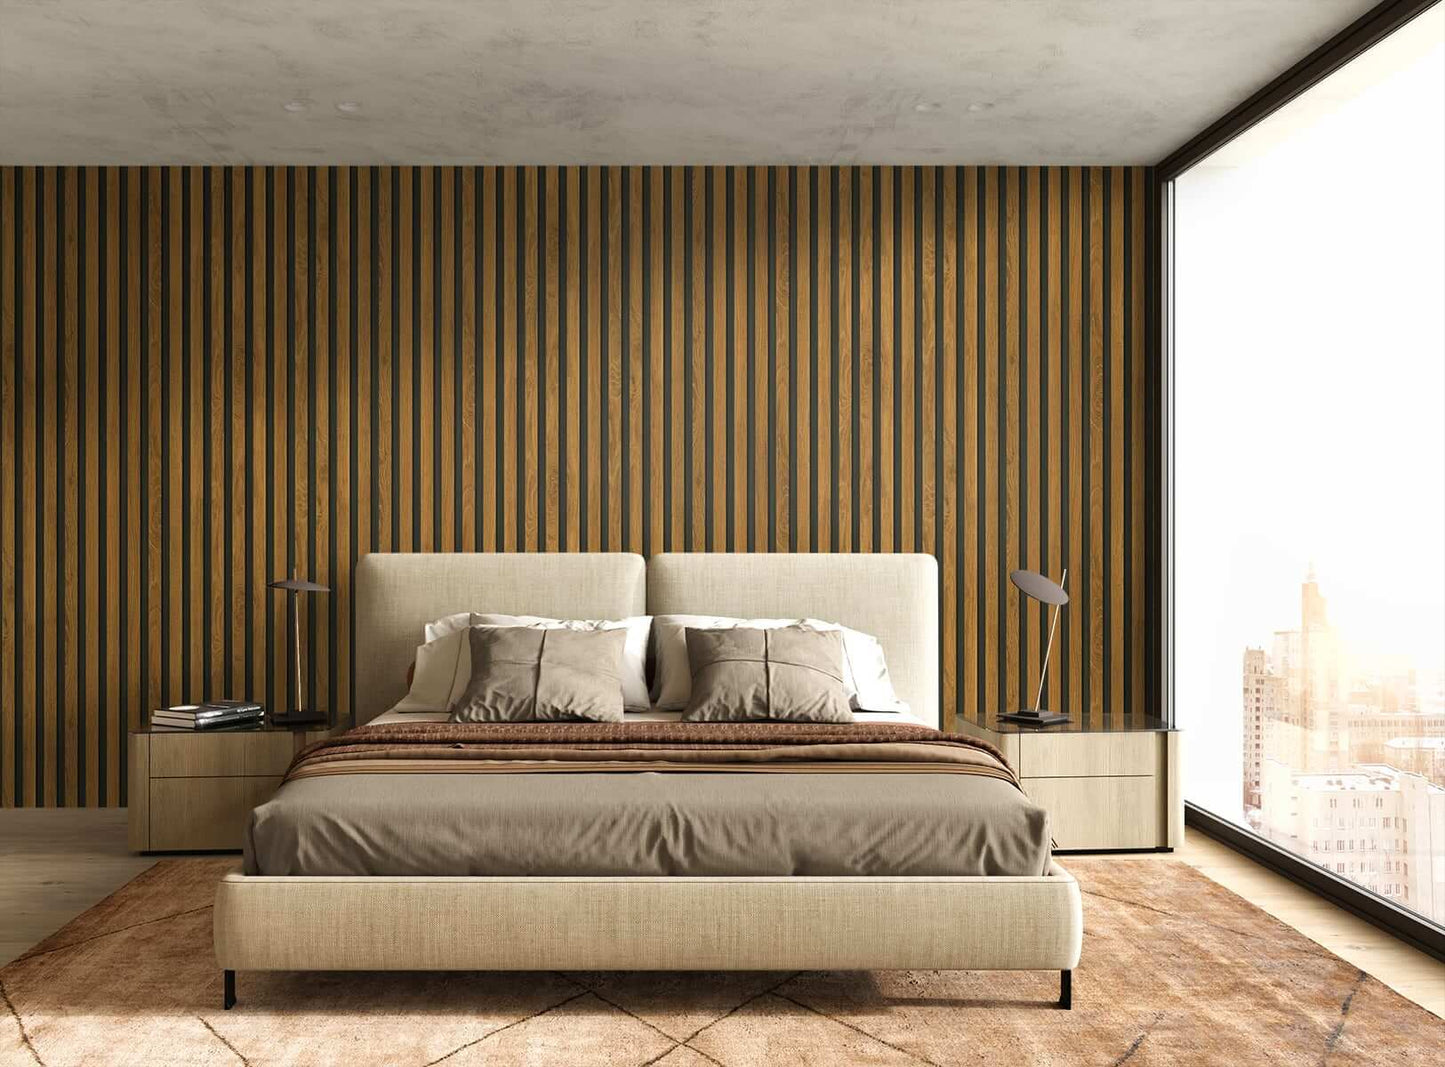 Seabrook Japandi Style Jun Wallpaper - Honey Brown